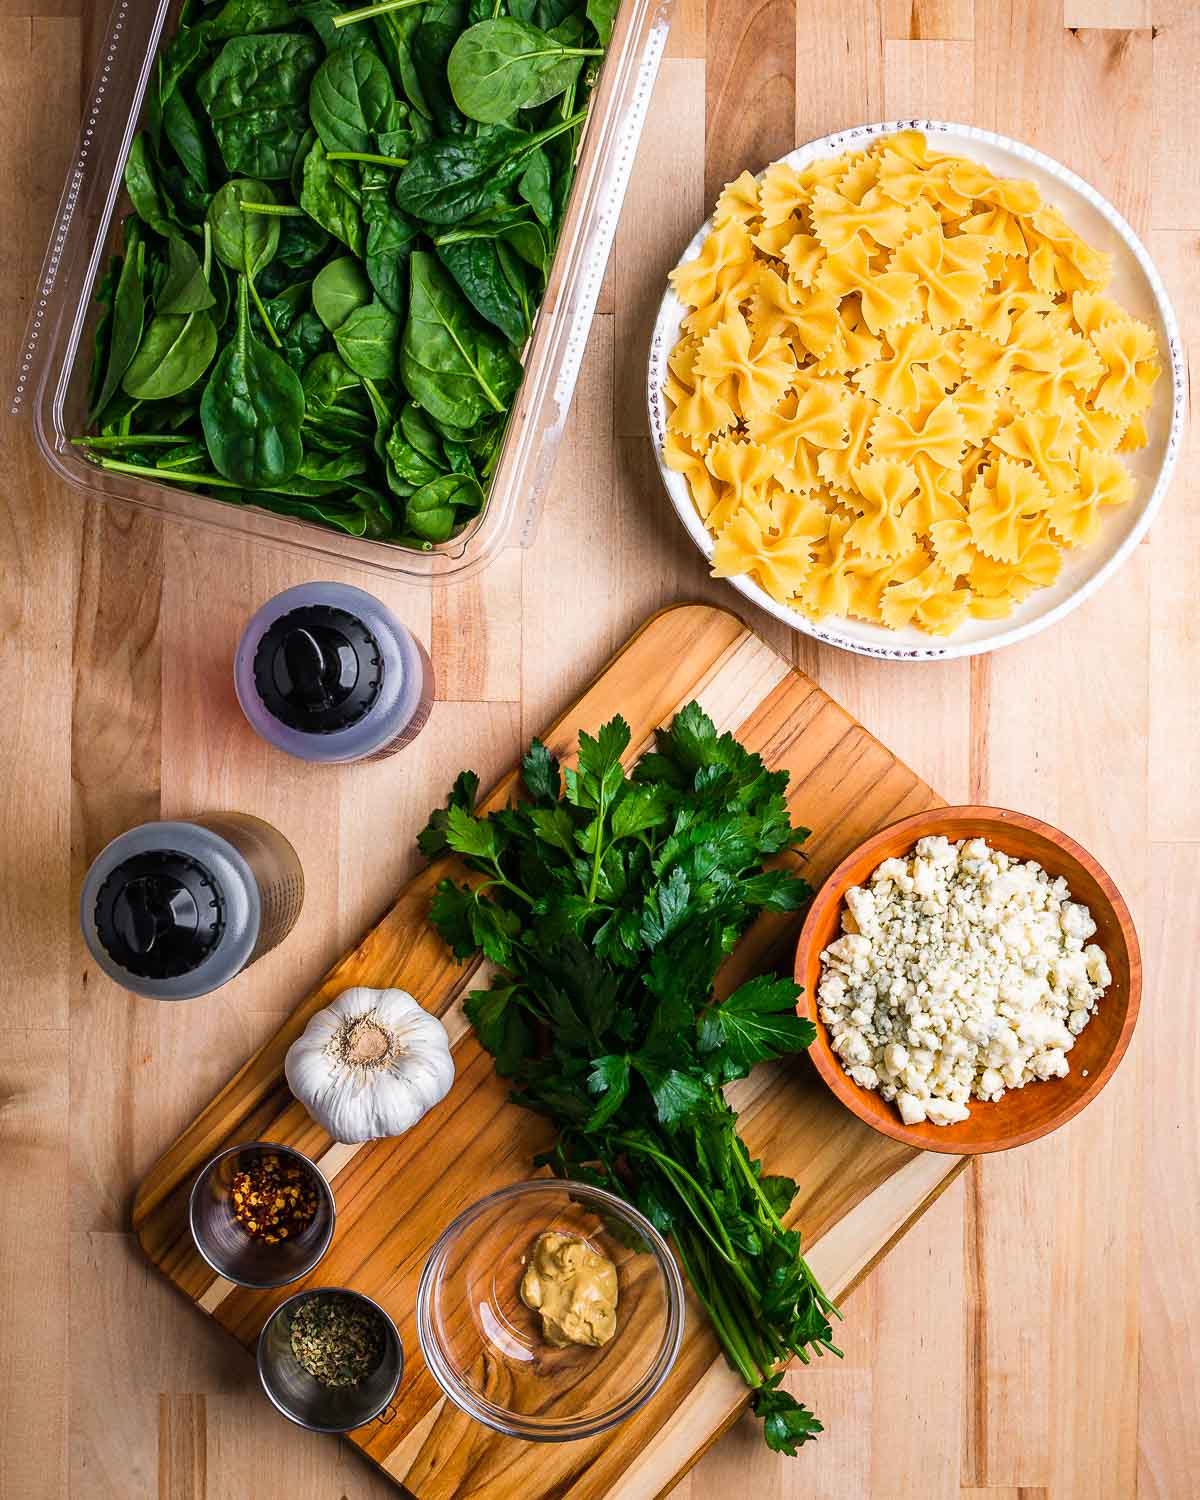 Ingredients shown: spinach, bow tie pasta, oil, vinegar, gorgonzola, parsley, garlic, mustard, red pepper flakes, and oregano.